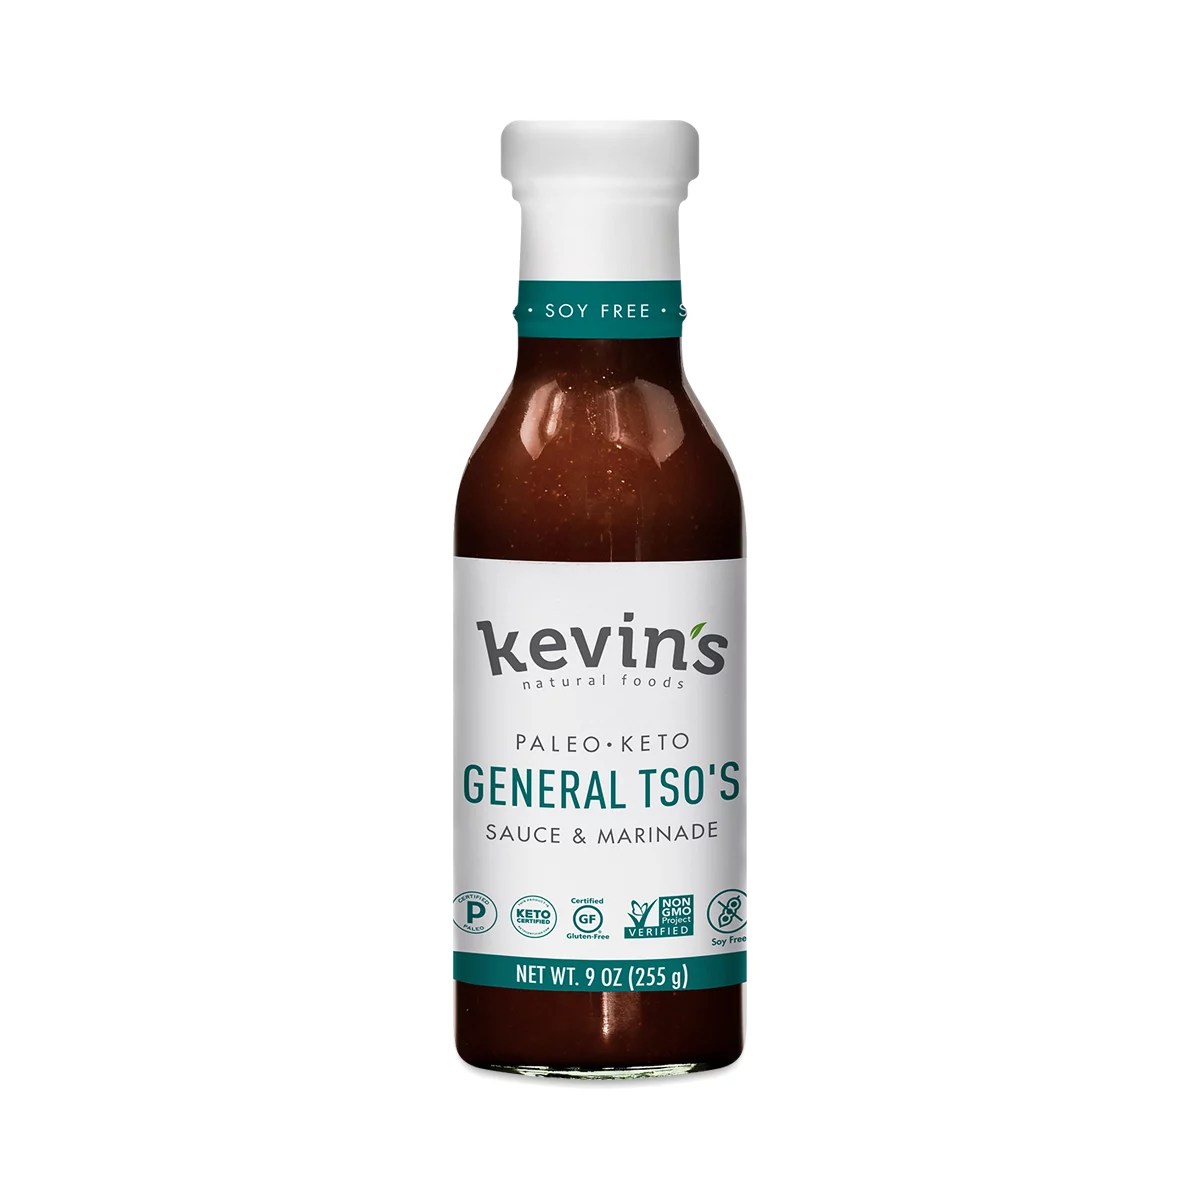 kevin's General Tso's Sauce & Marinade